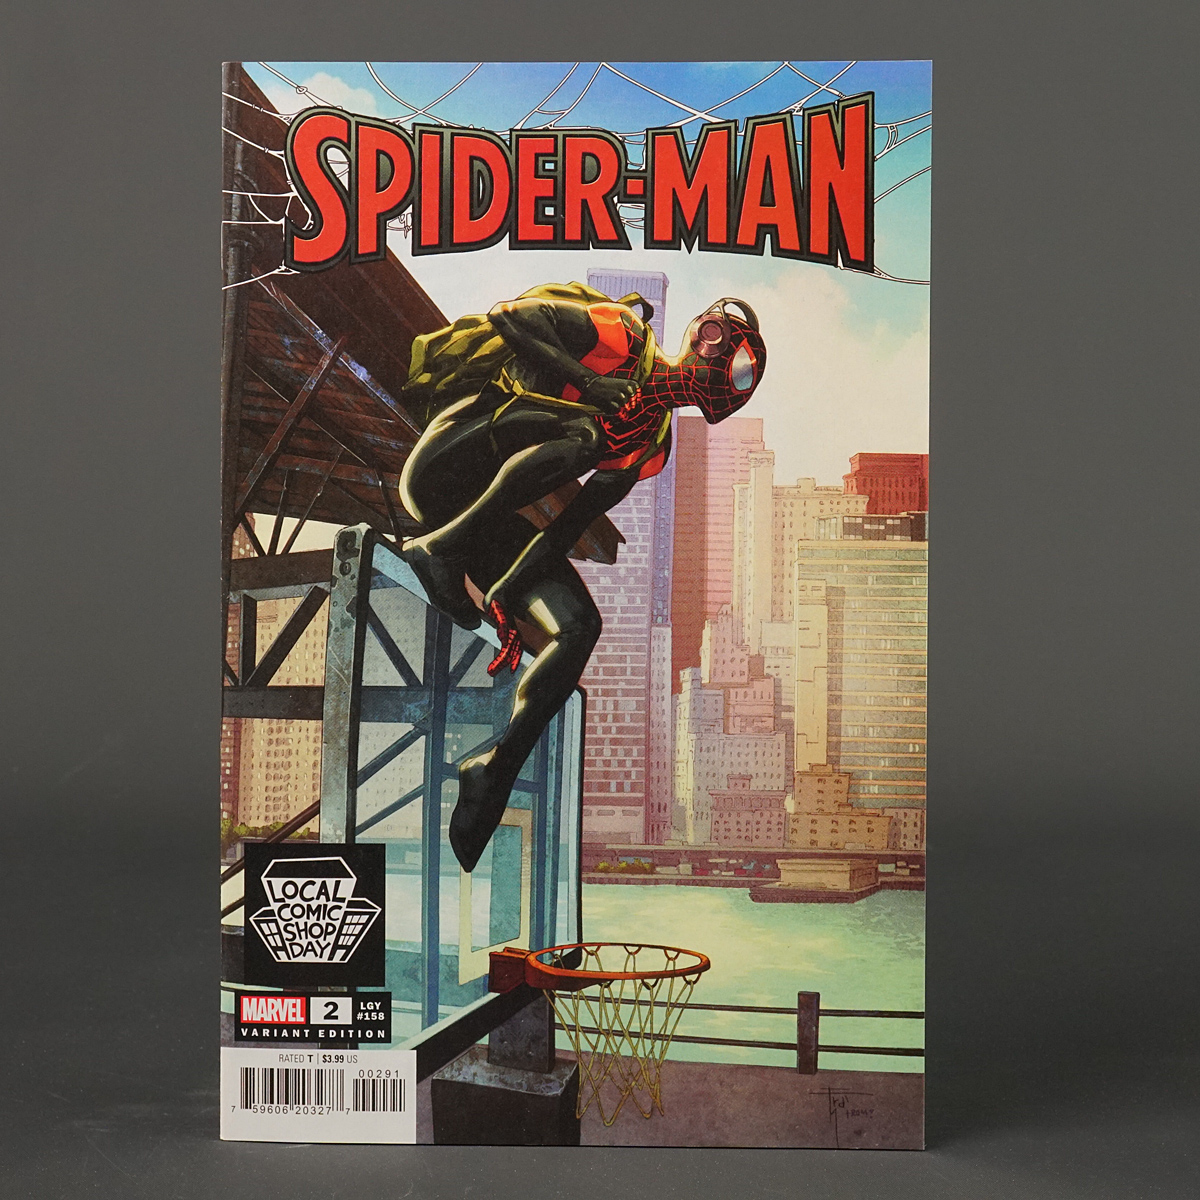 SPIDER-MAN #2 var LCSD Marvel Comics 2022 AUG228094 (CA) Mobili (W) Slott